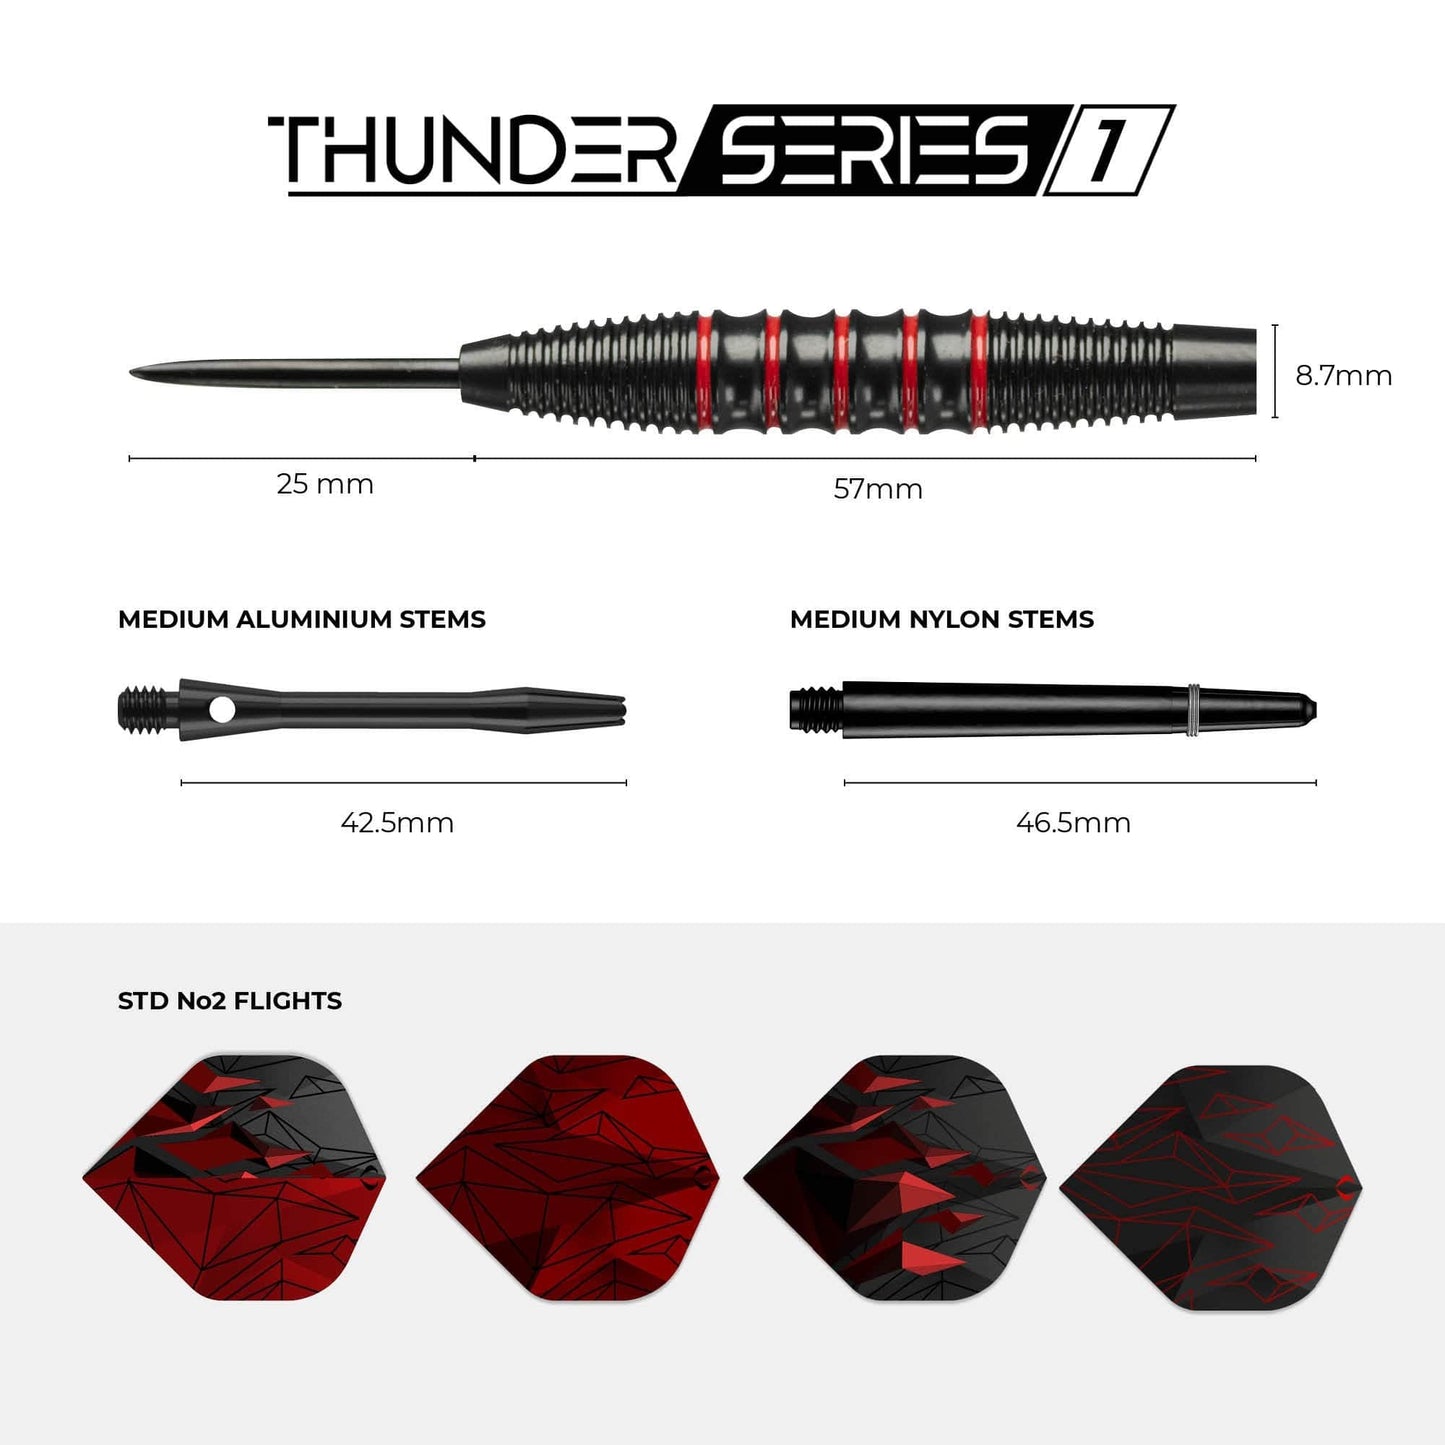 Darts Corner - Thunder Series 1 - Steel Tip Brass - 2 Sets Darts - M4 - Black & Red - 21g 21g